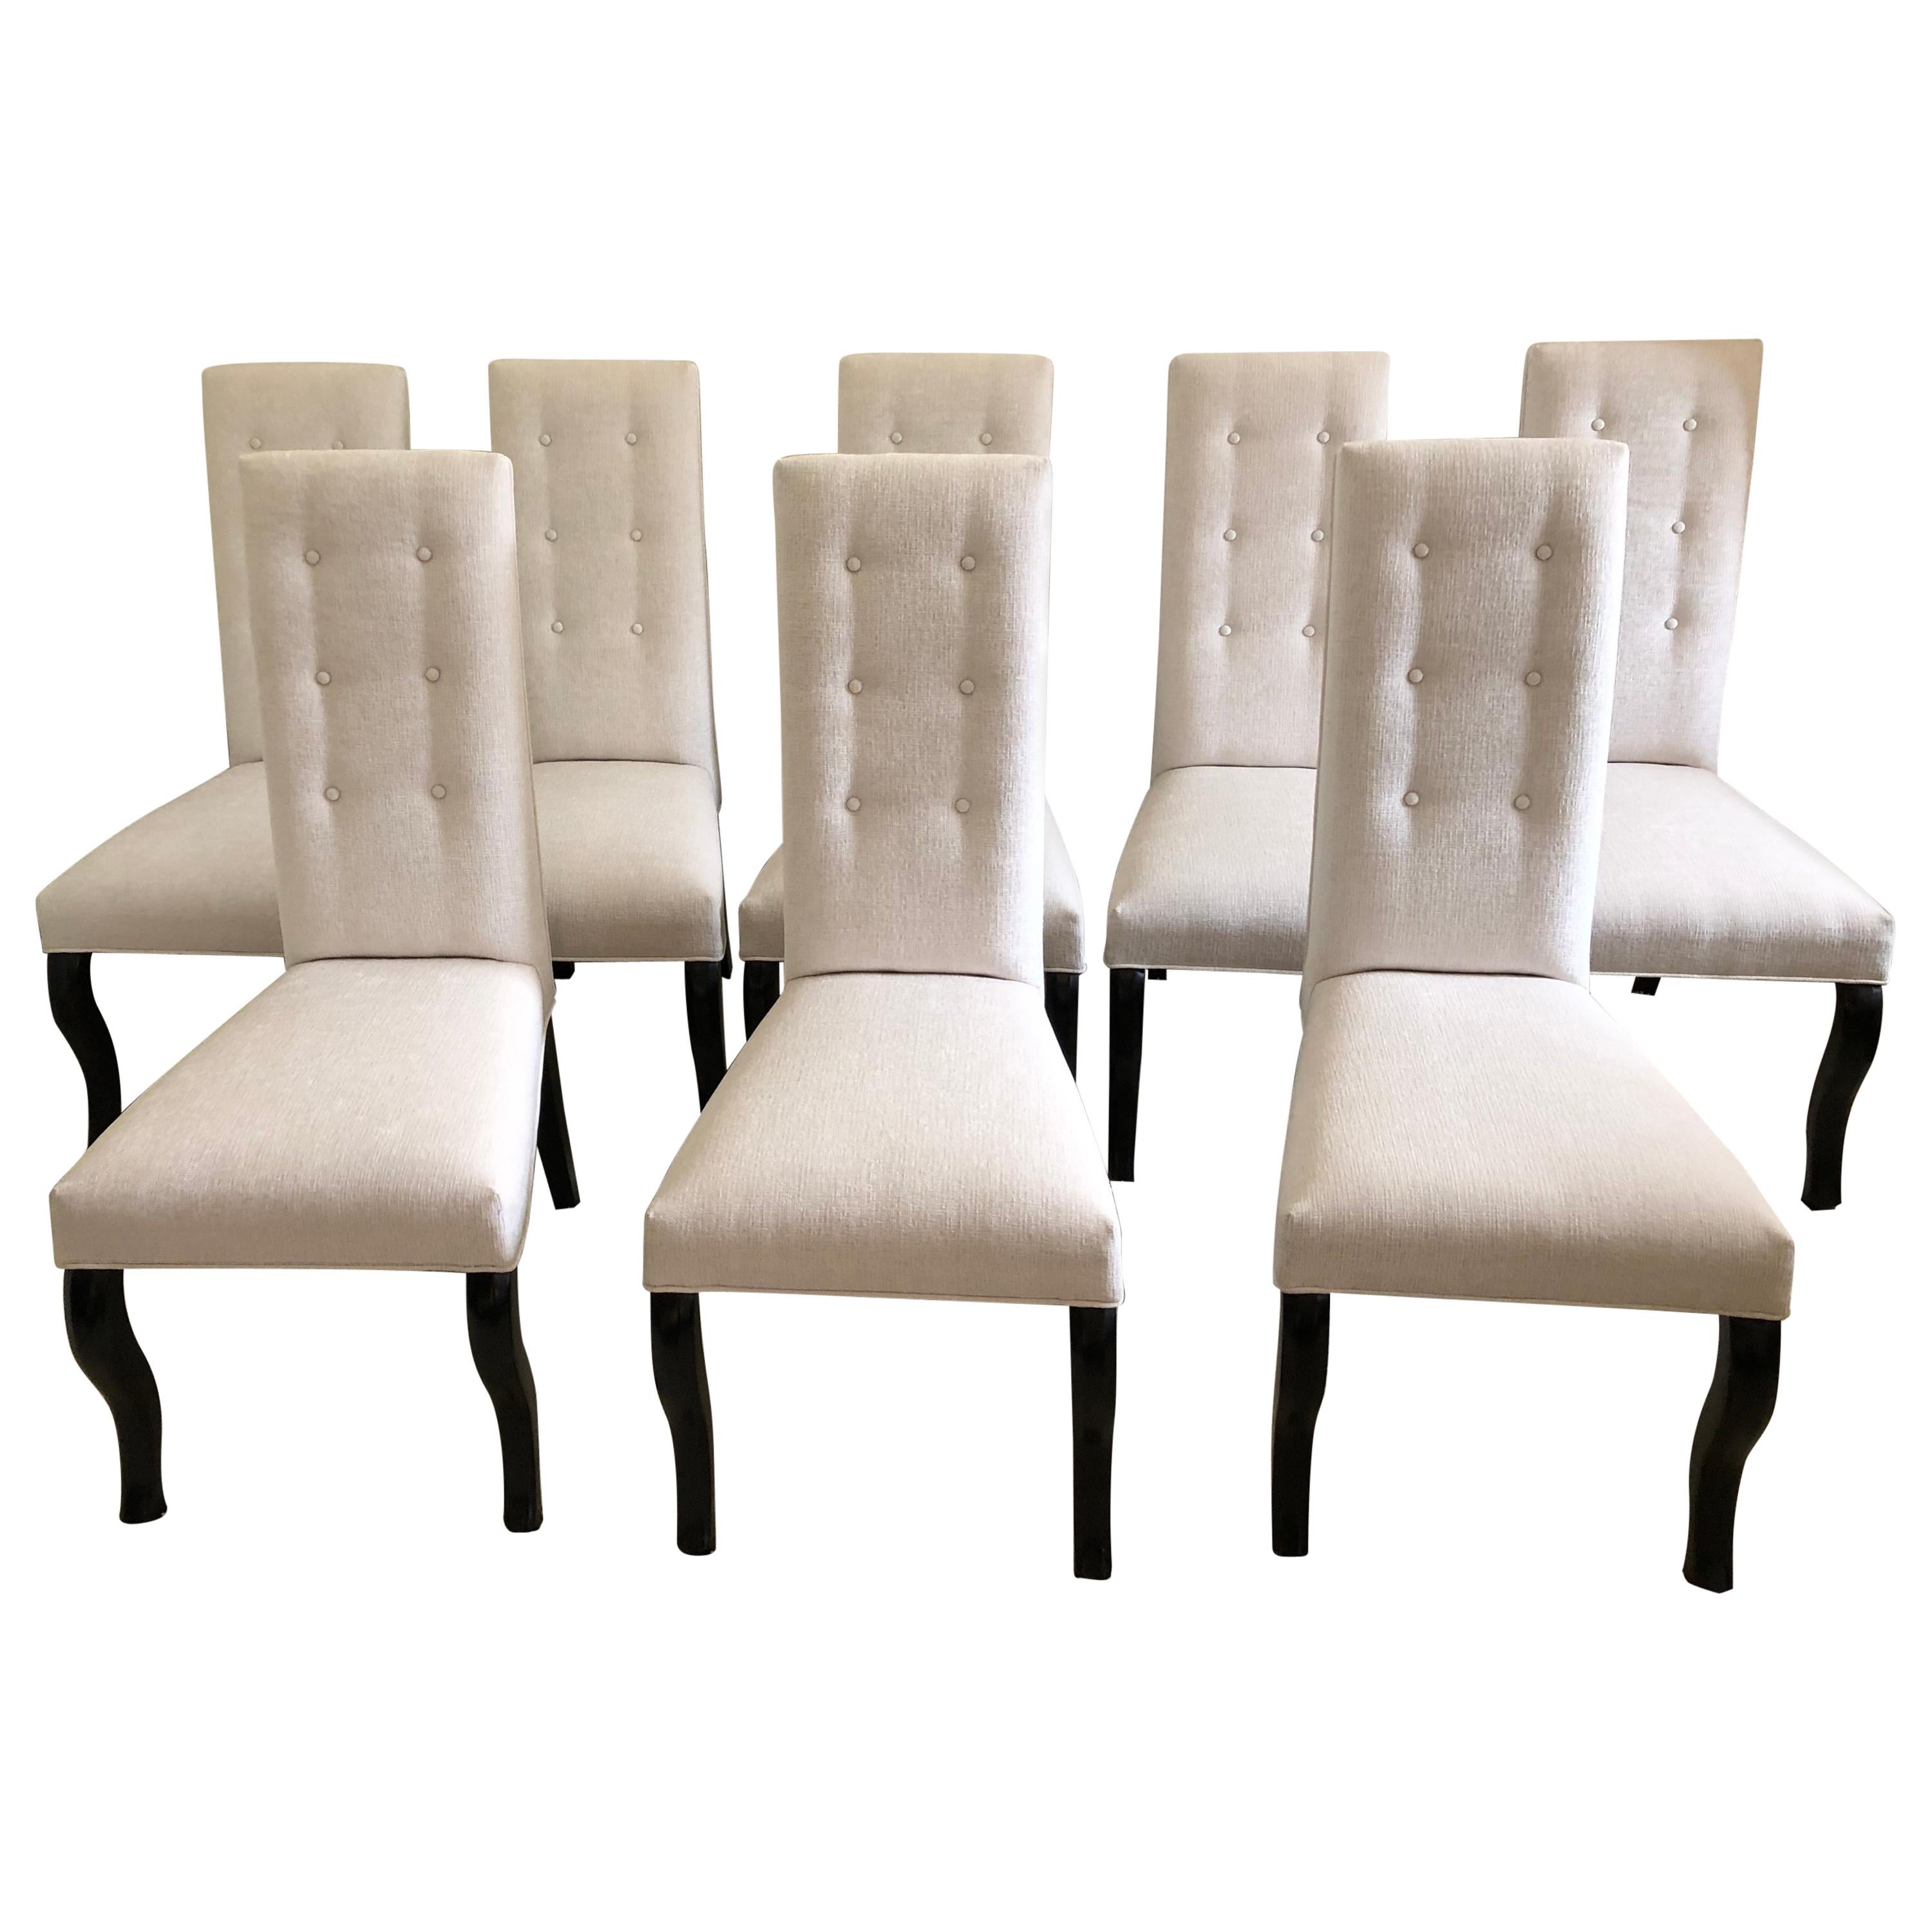 Set of 8 Cleopatra Black Leg High Back Dining Chairs